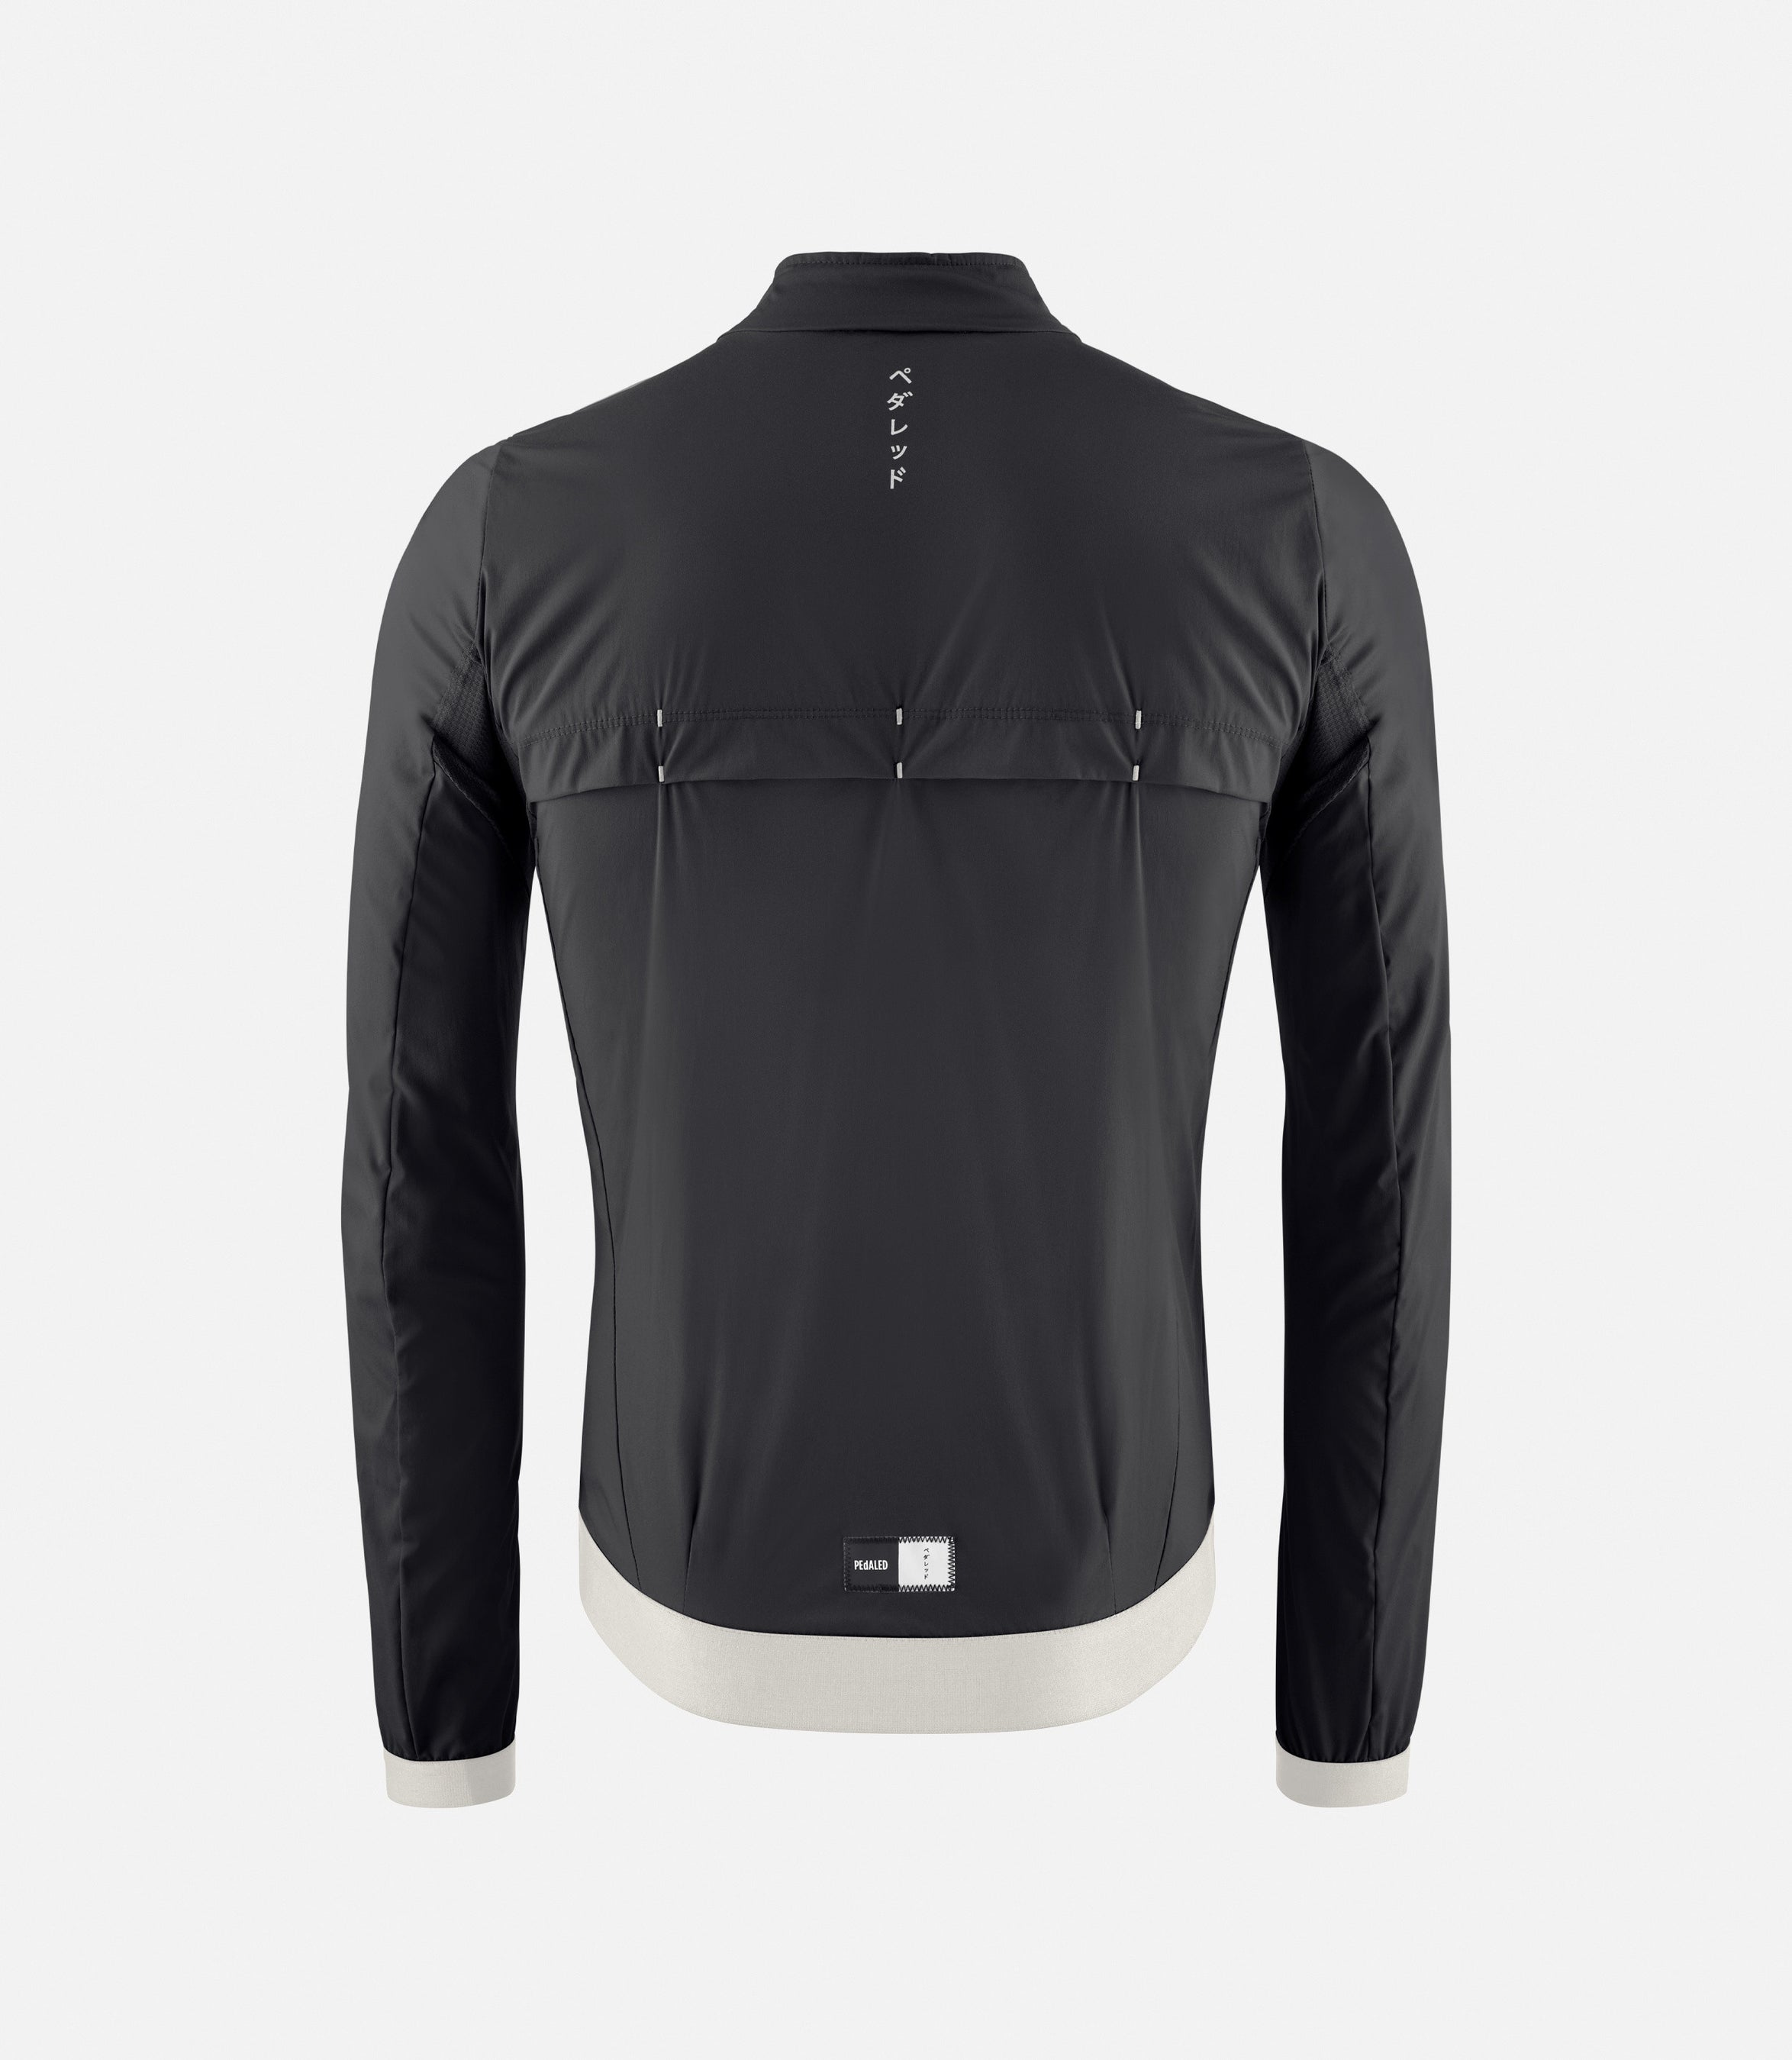 23SJKES00PE_2_men cycling jacket windproof black essential back pedaled